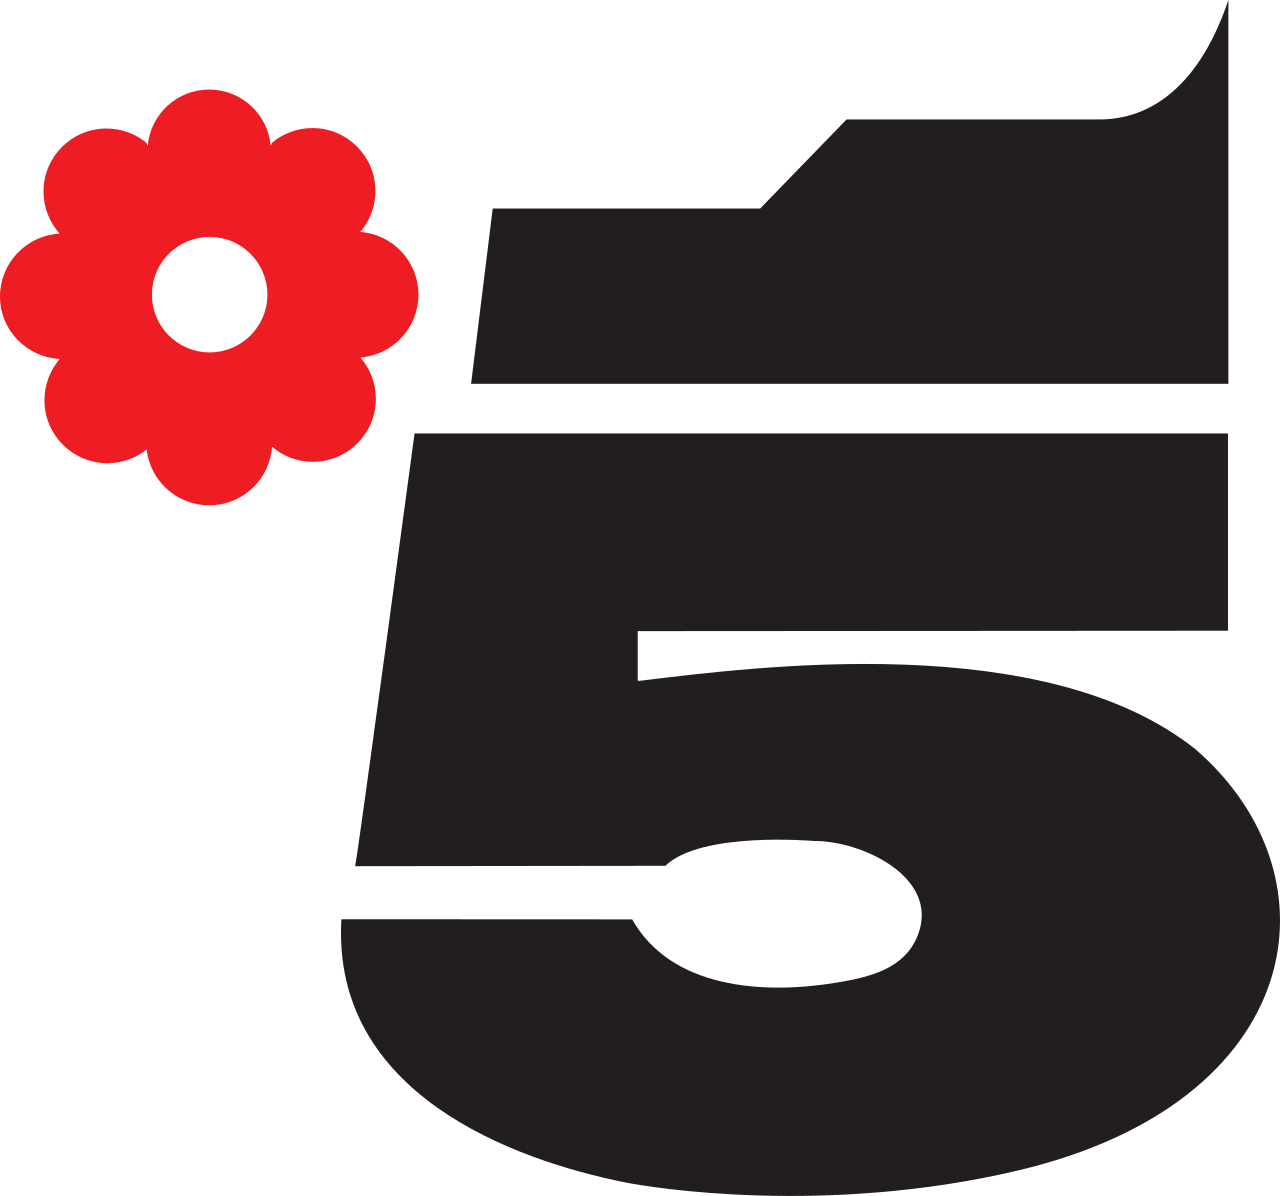 Canale 5. Телекомпании Mediaset 5. Tv5 logo. 1989 Логотип. Пятерка тв